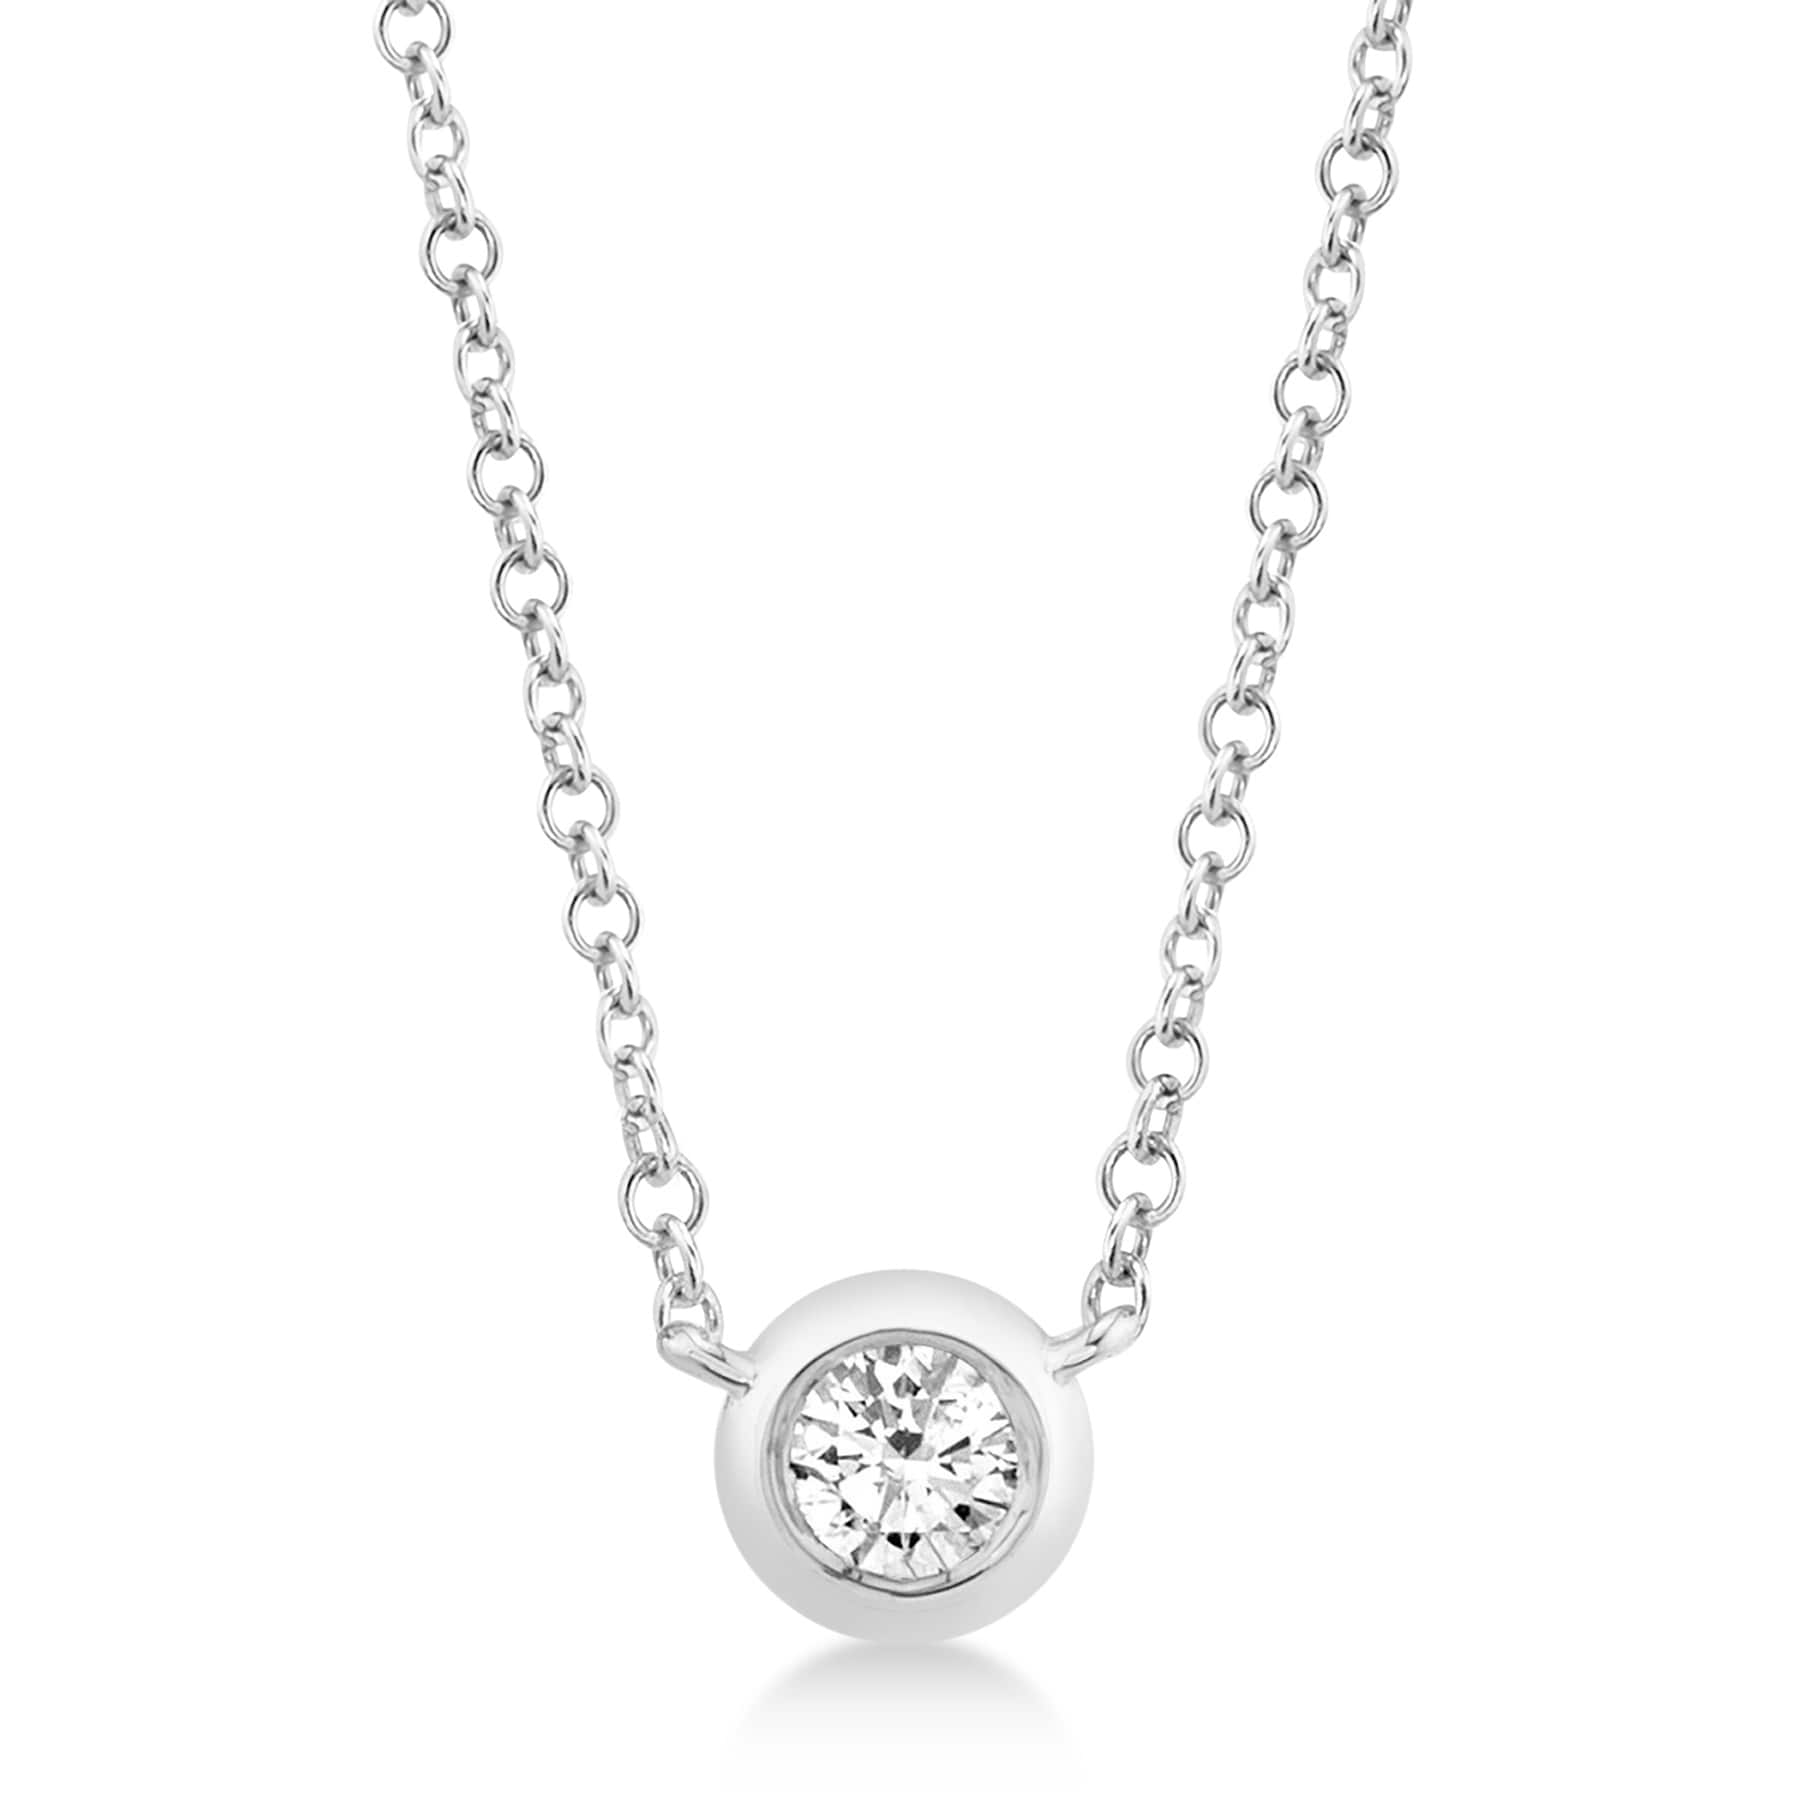 Bezel Diamond Pendant Solitare Necklace 14k White Gold (0.20ct)